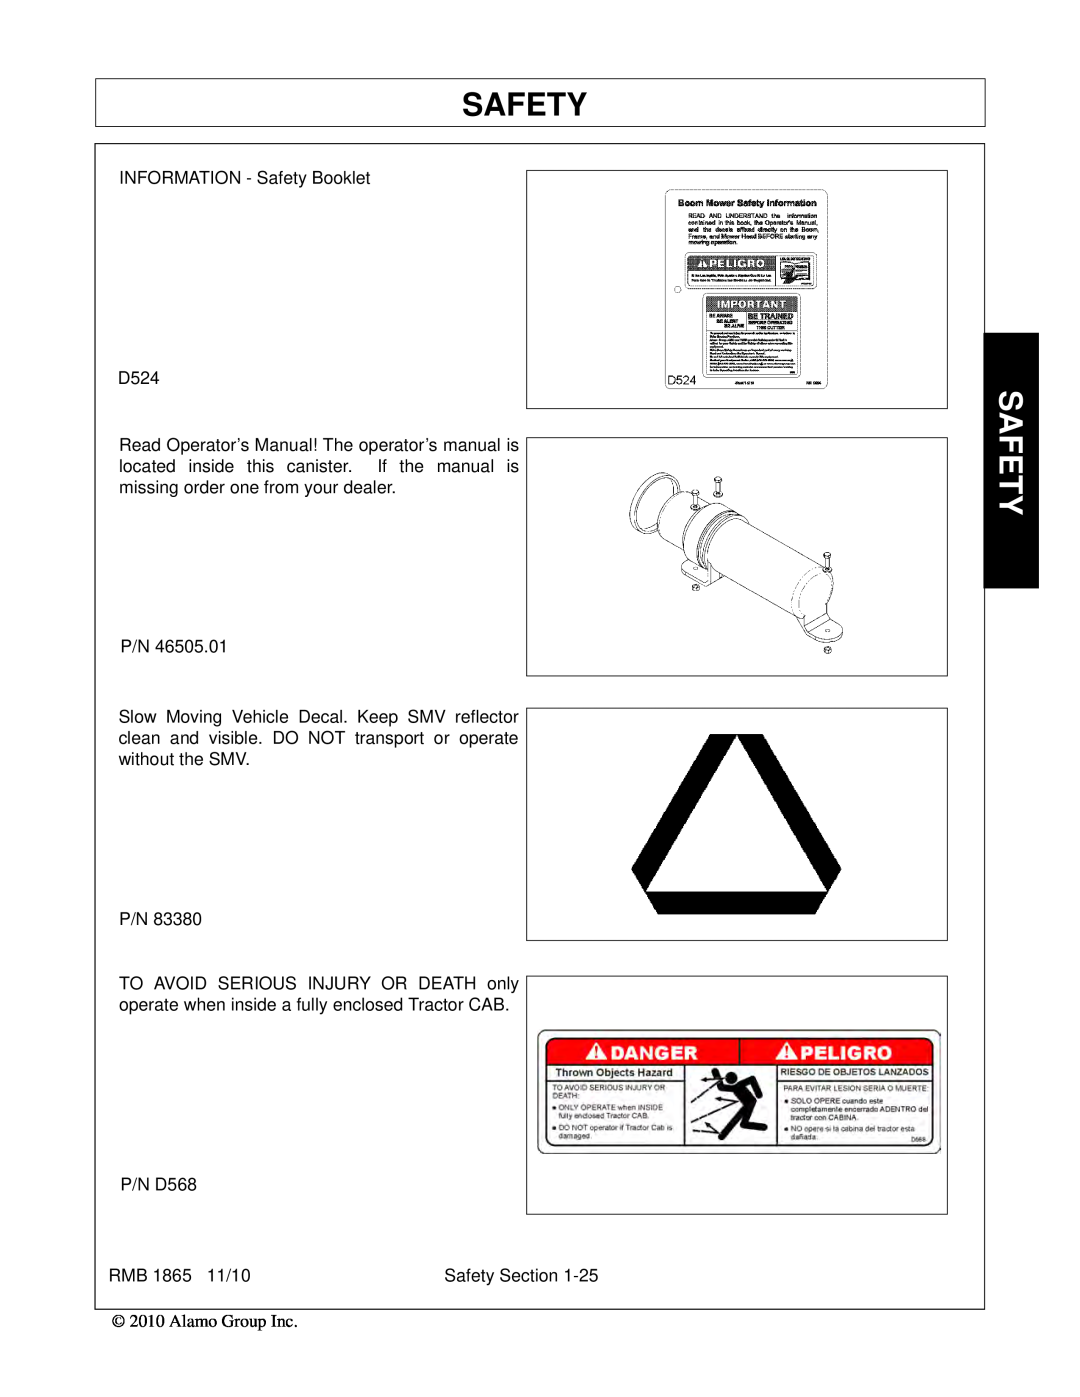 Bush Hog RMB 1865 manual Safety 